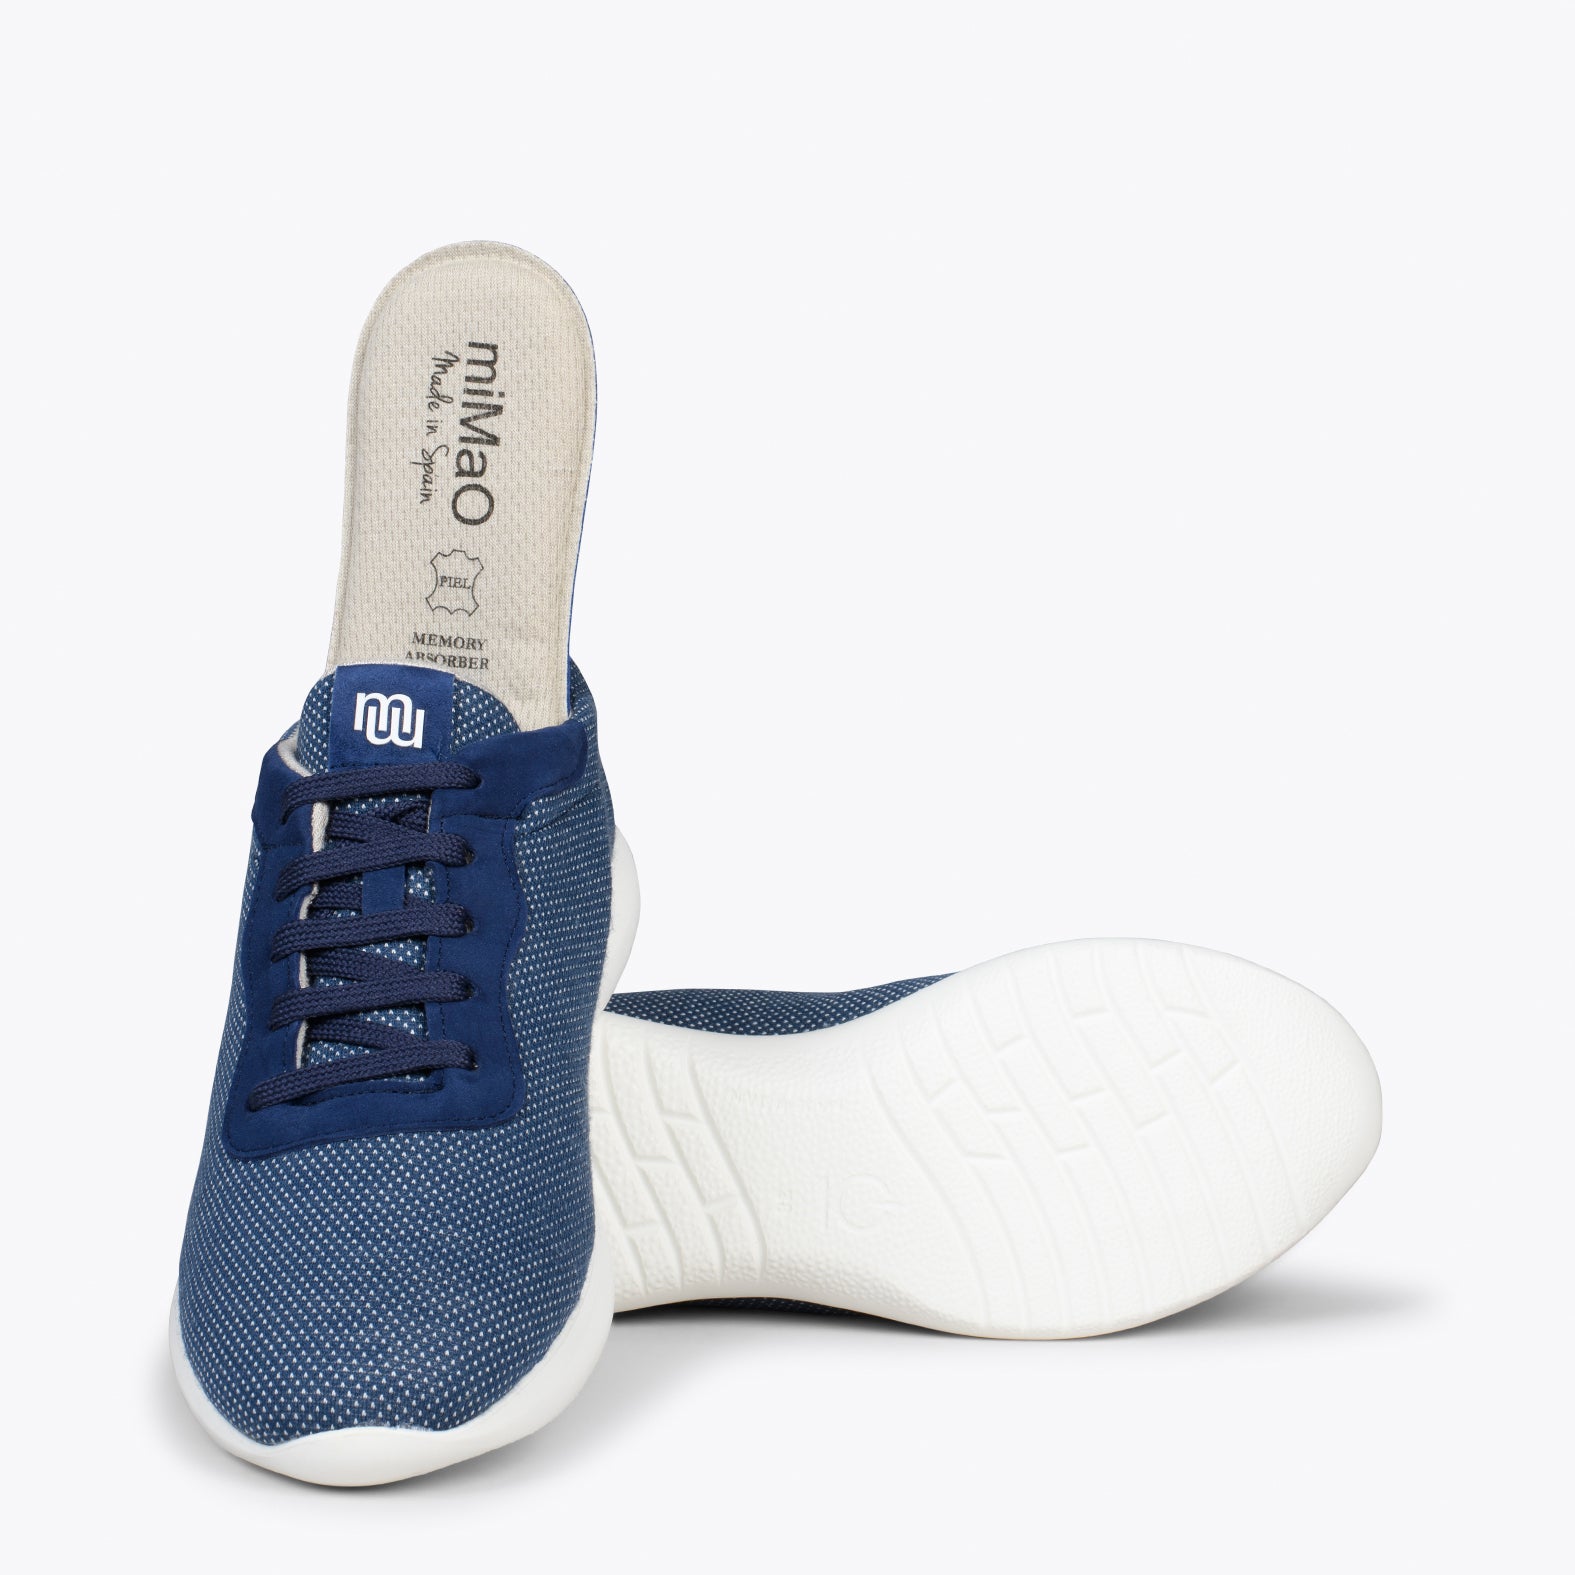 YOGA – NAVY sneakers crafted in merino wool